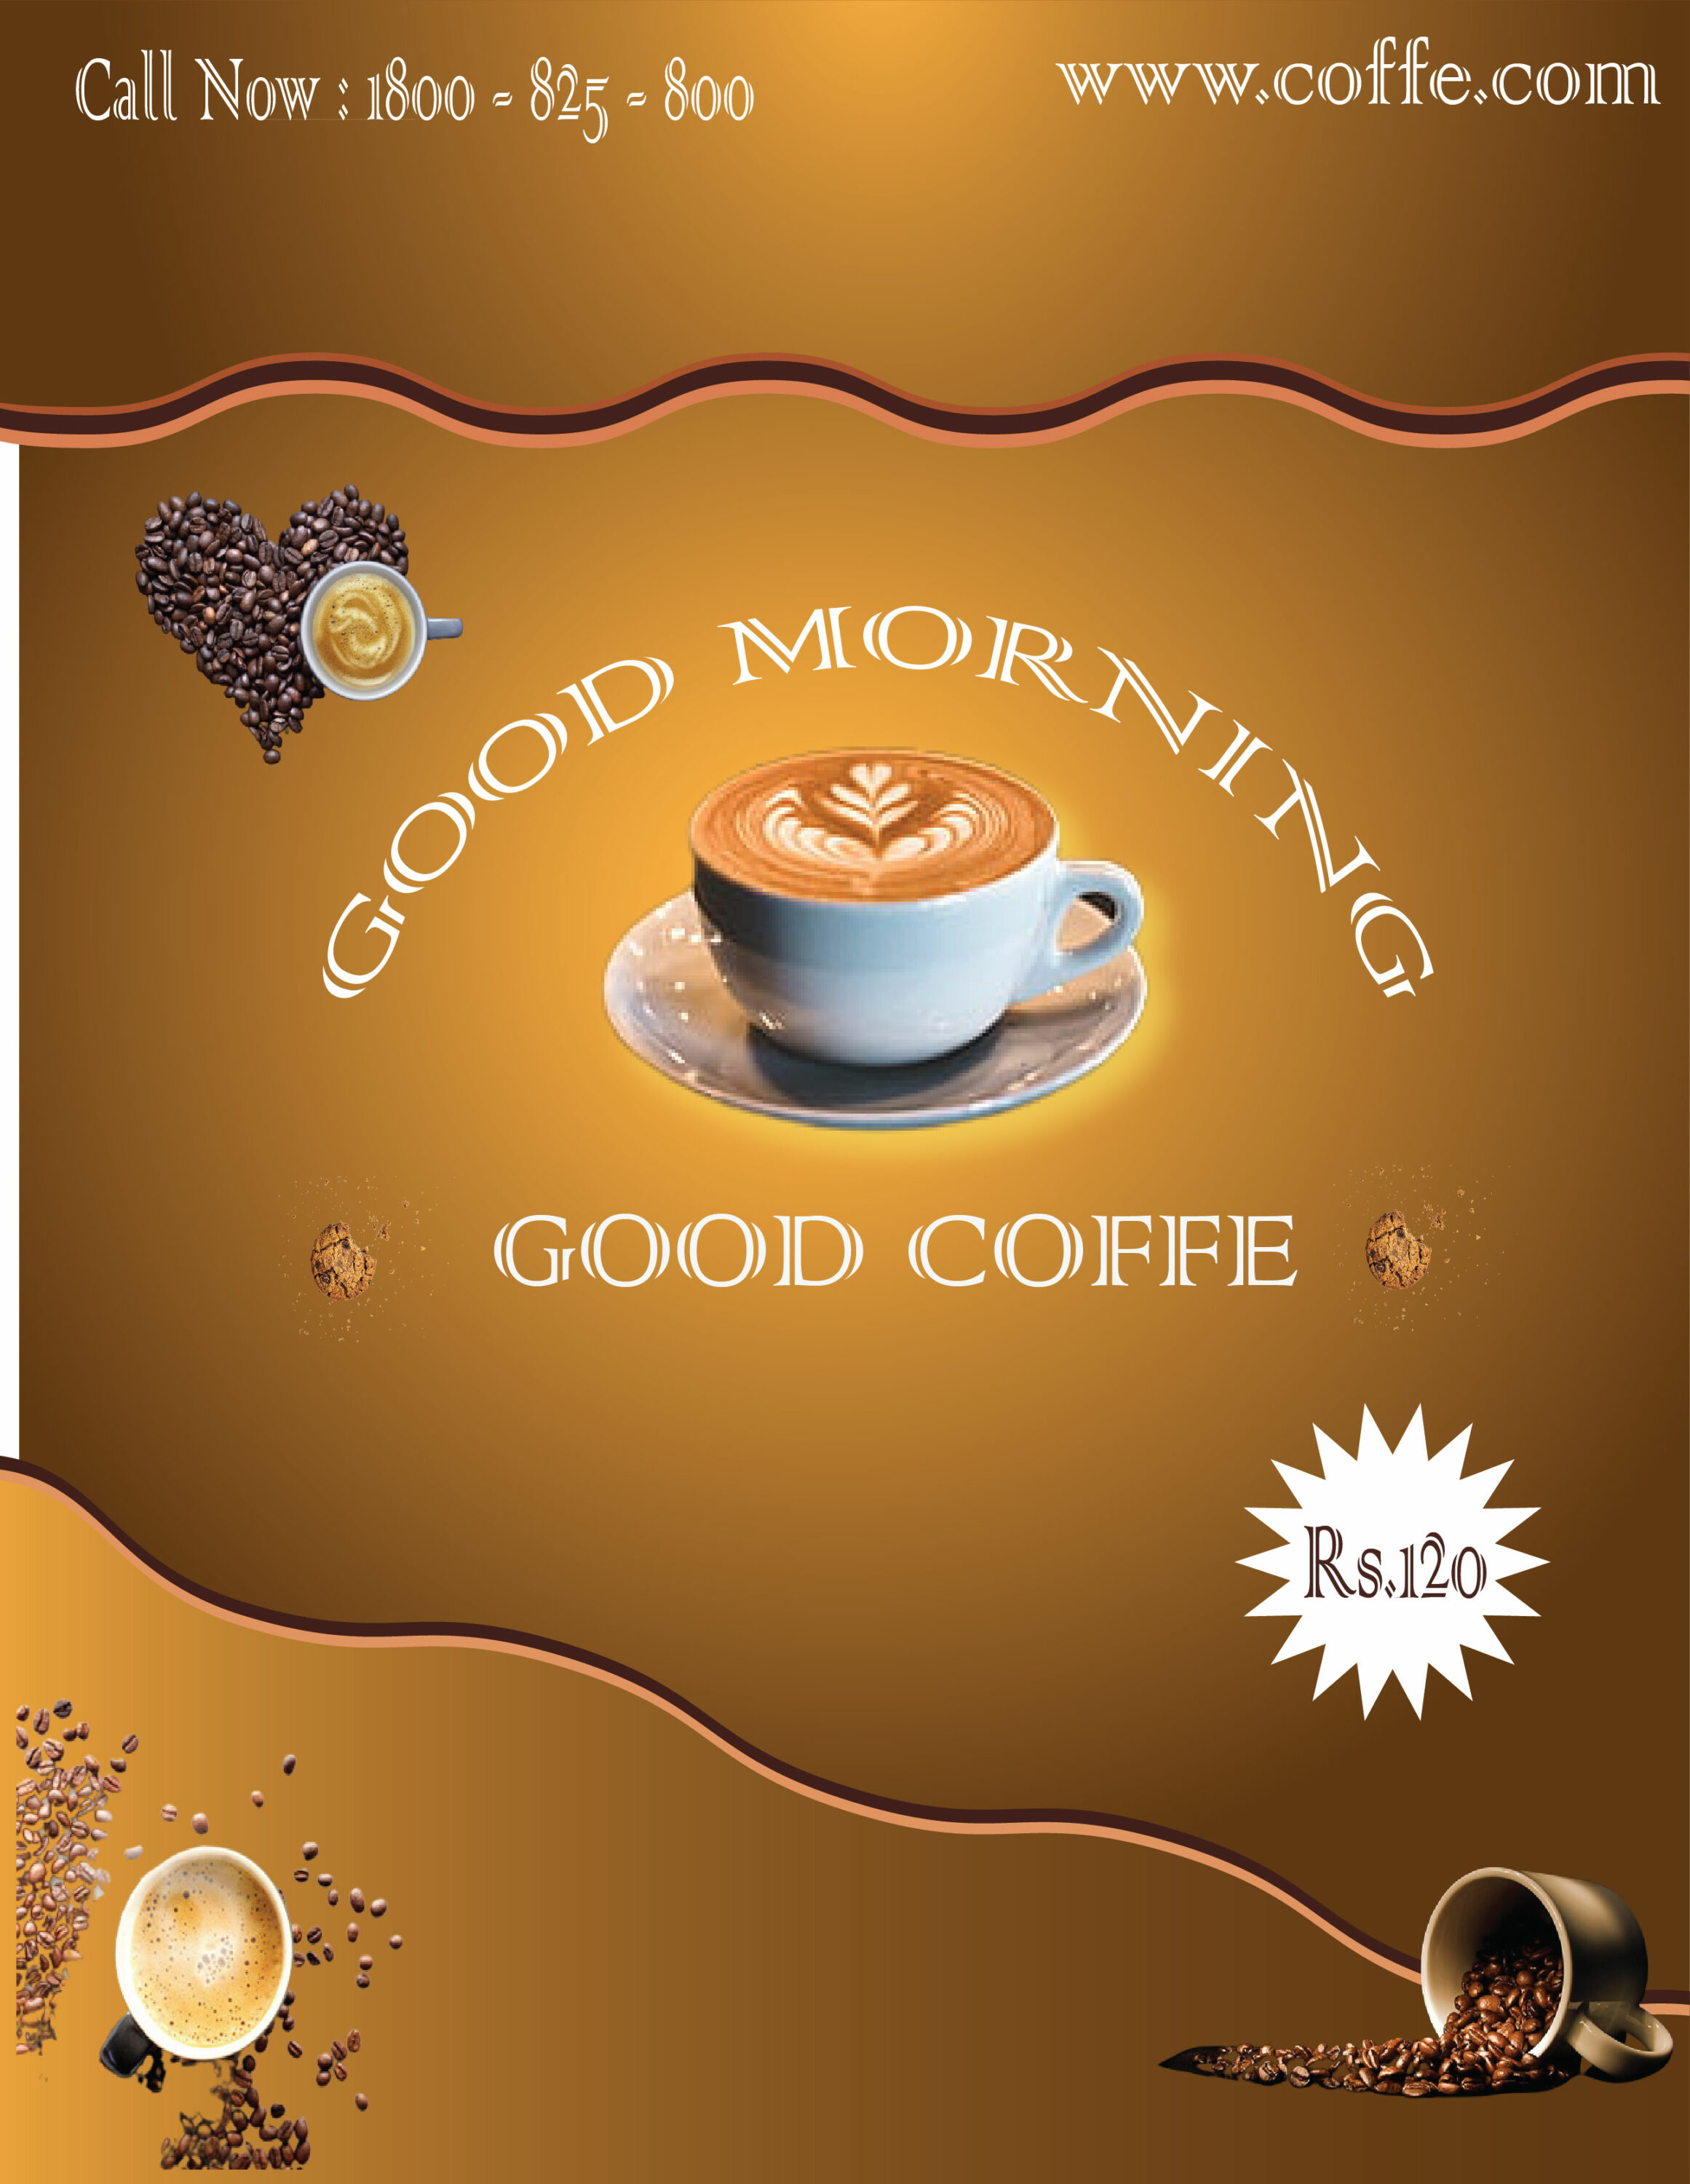 Coffee Poster Design.